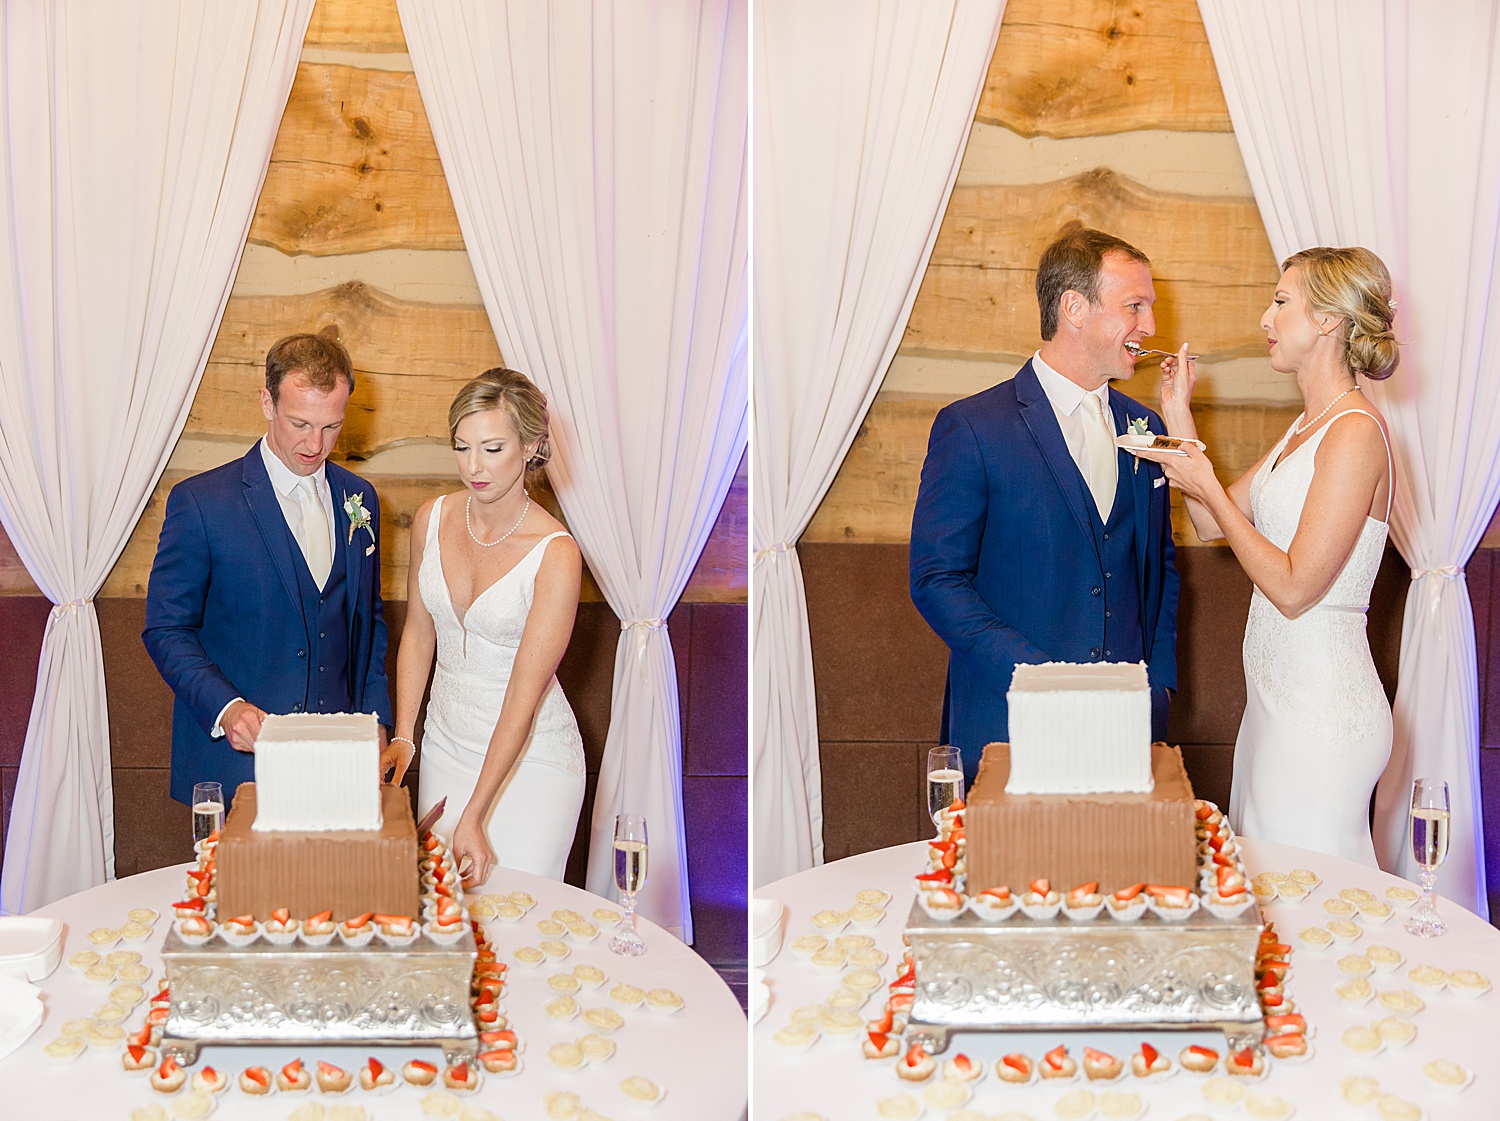 couple cut cake